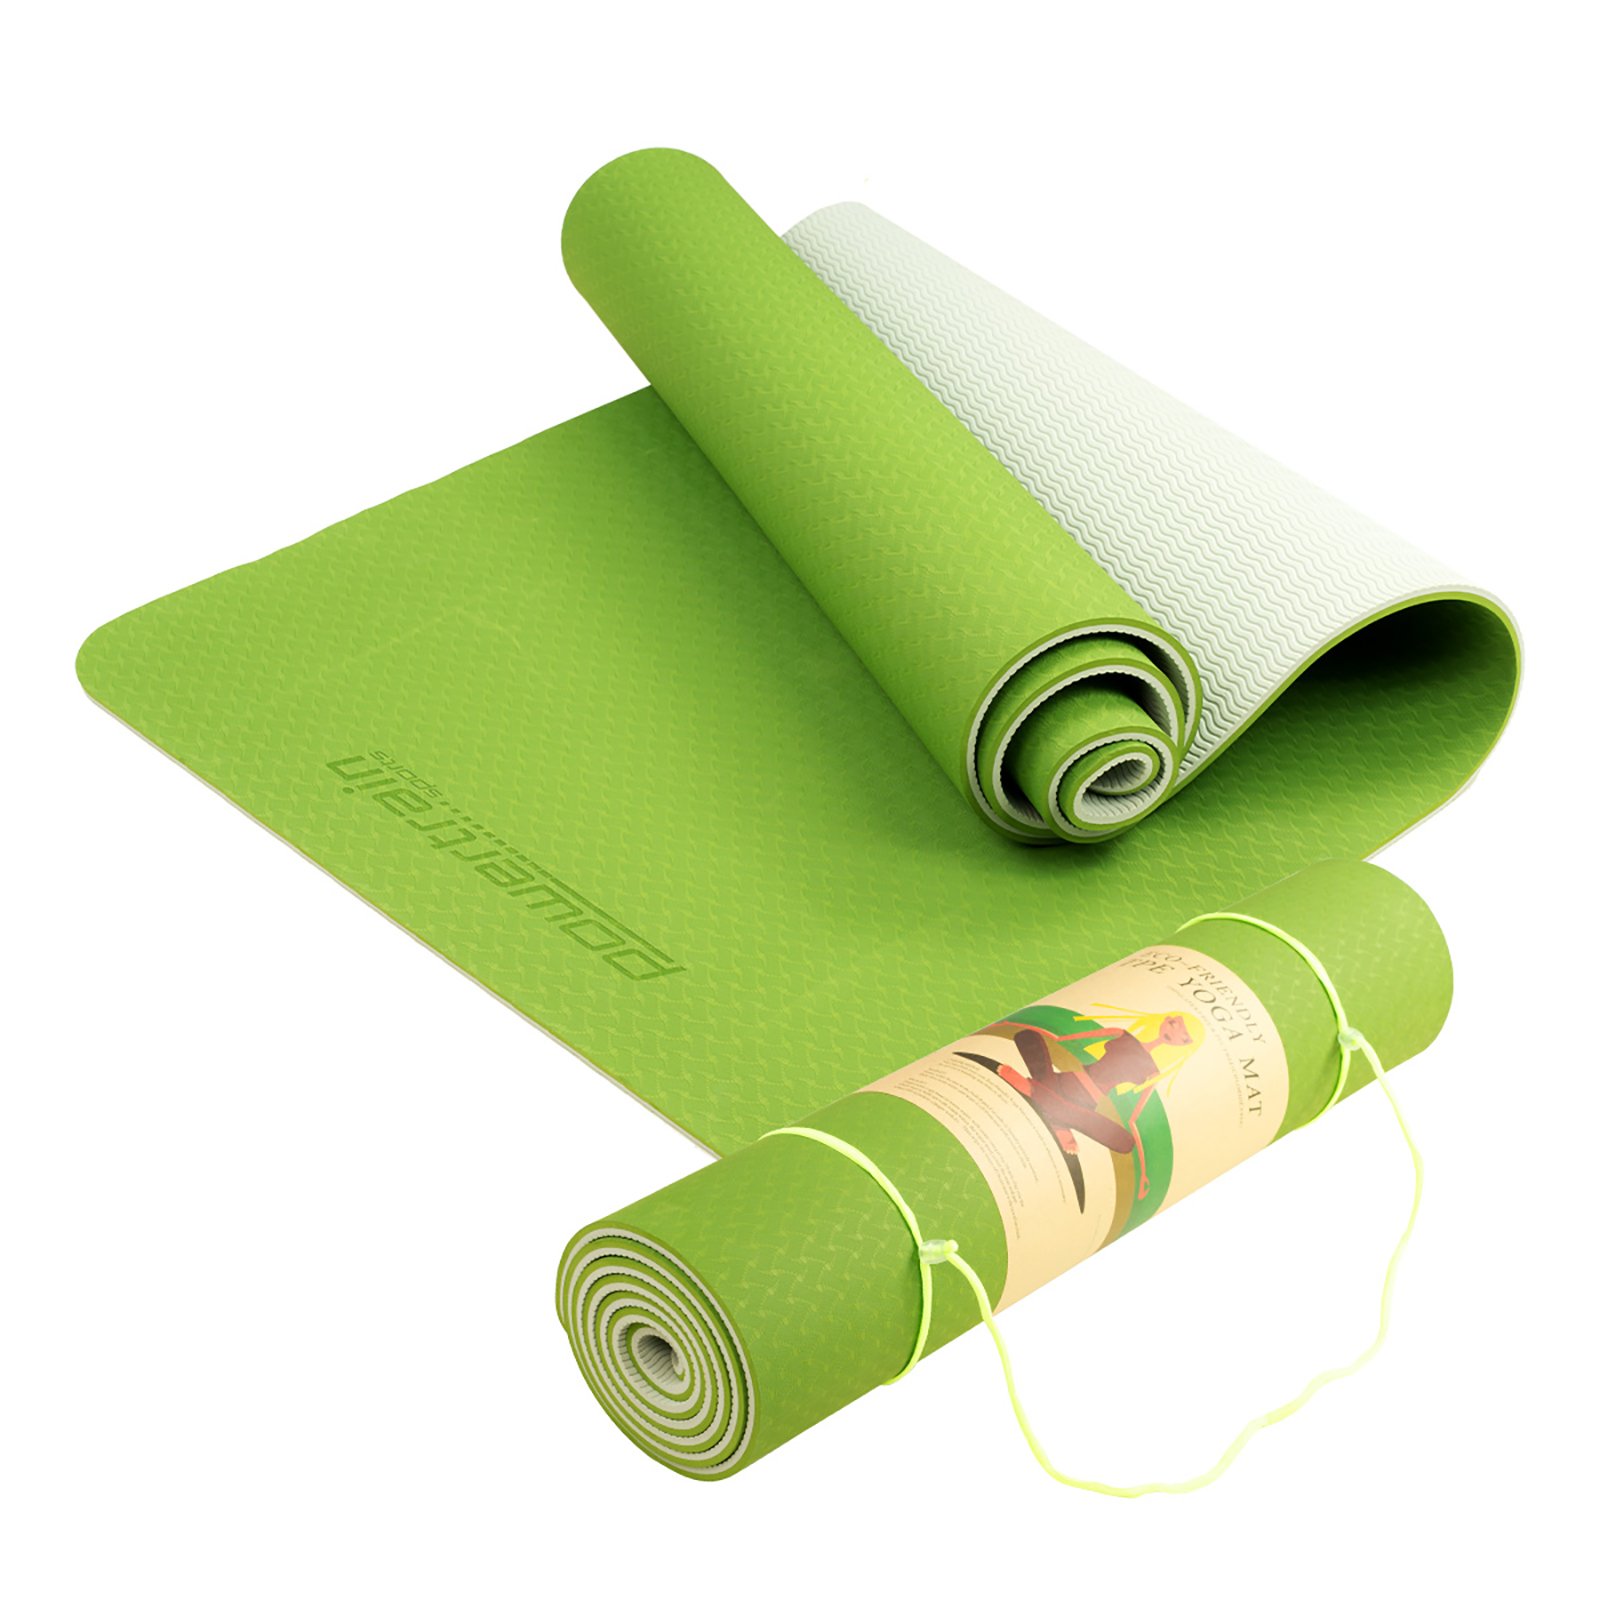 Powertrain Eco-Friendly TPE Pilates Exercise Yoga Mat 8mm - Green 1